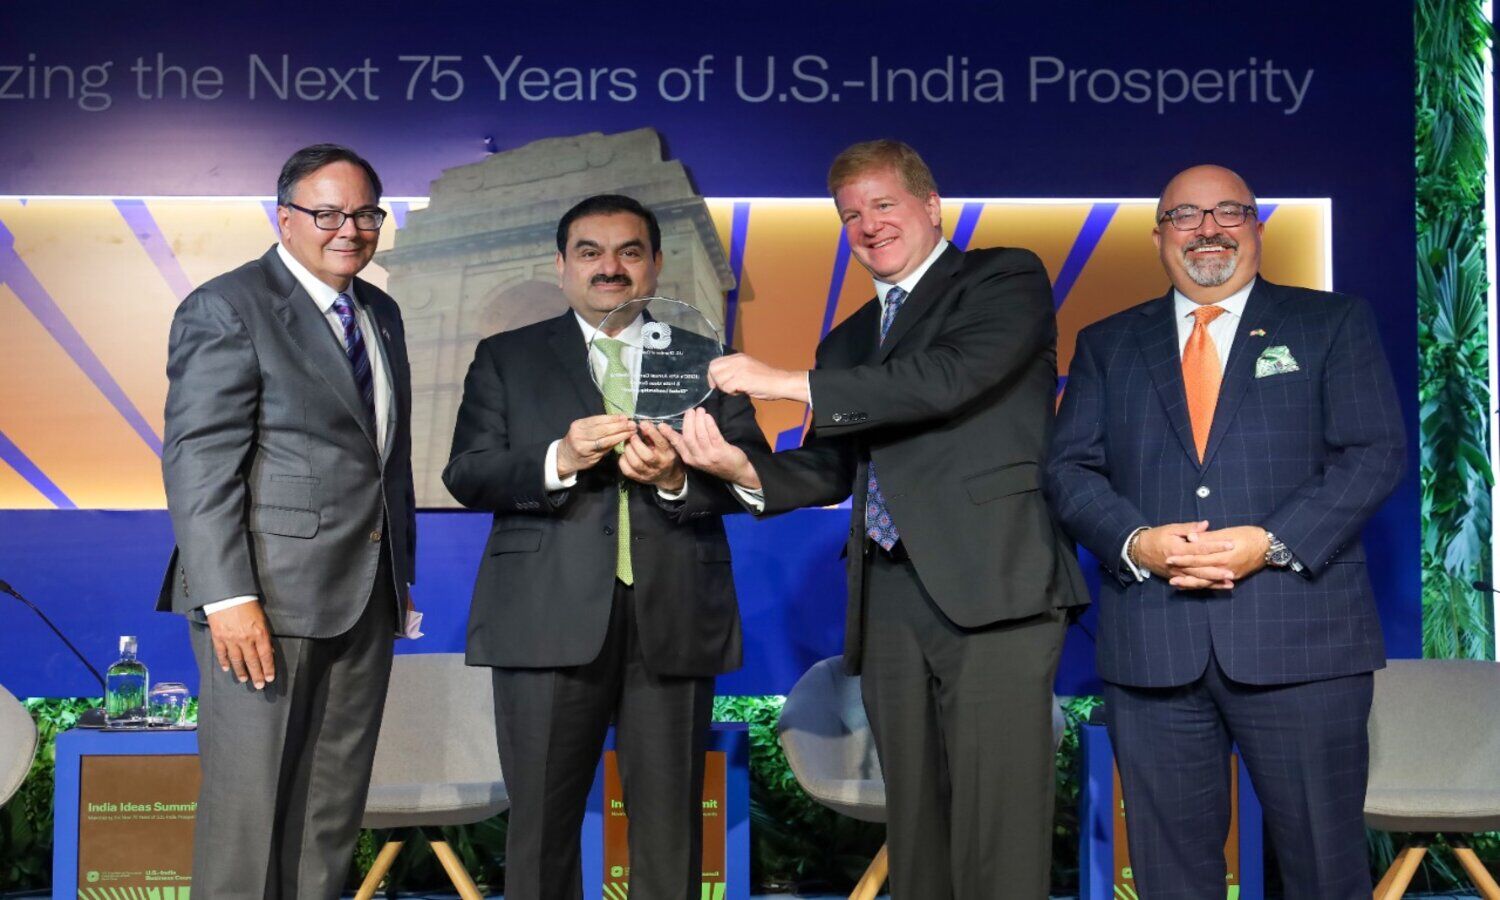 Gautam Adani Award: Gautam Adani honored with USIBC Global Leadership Award